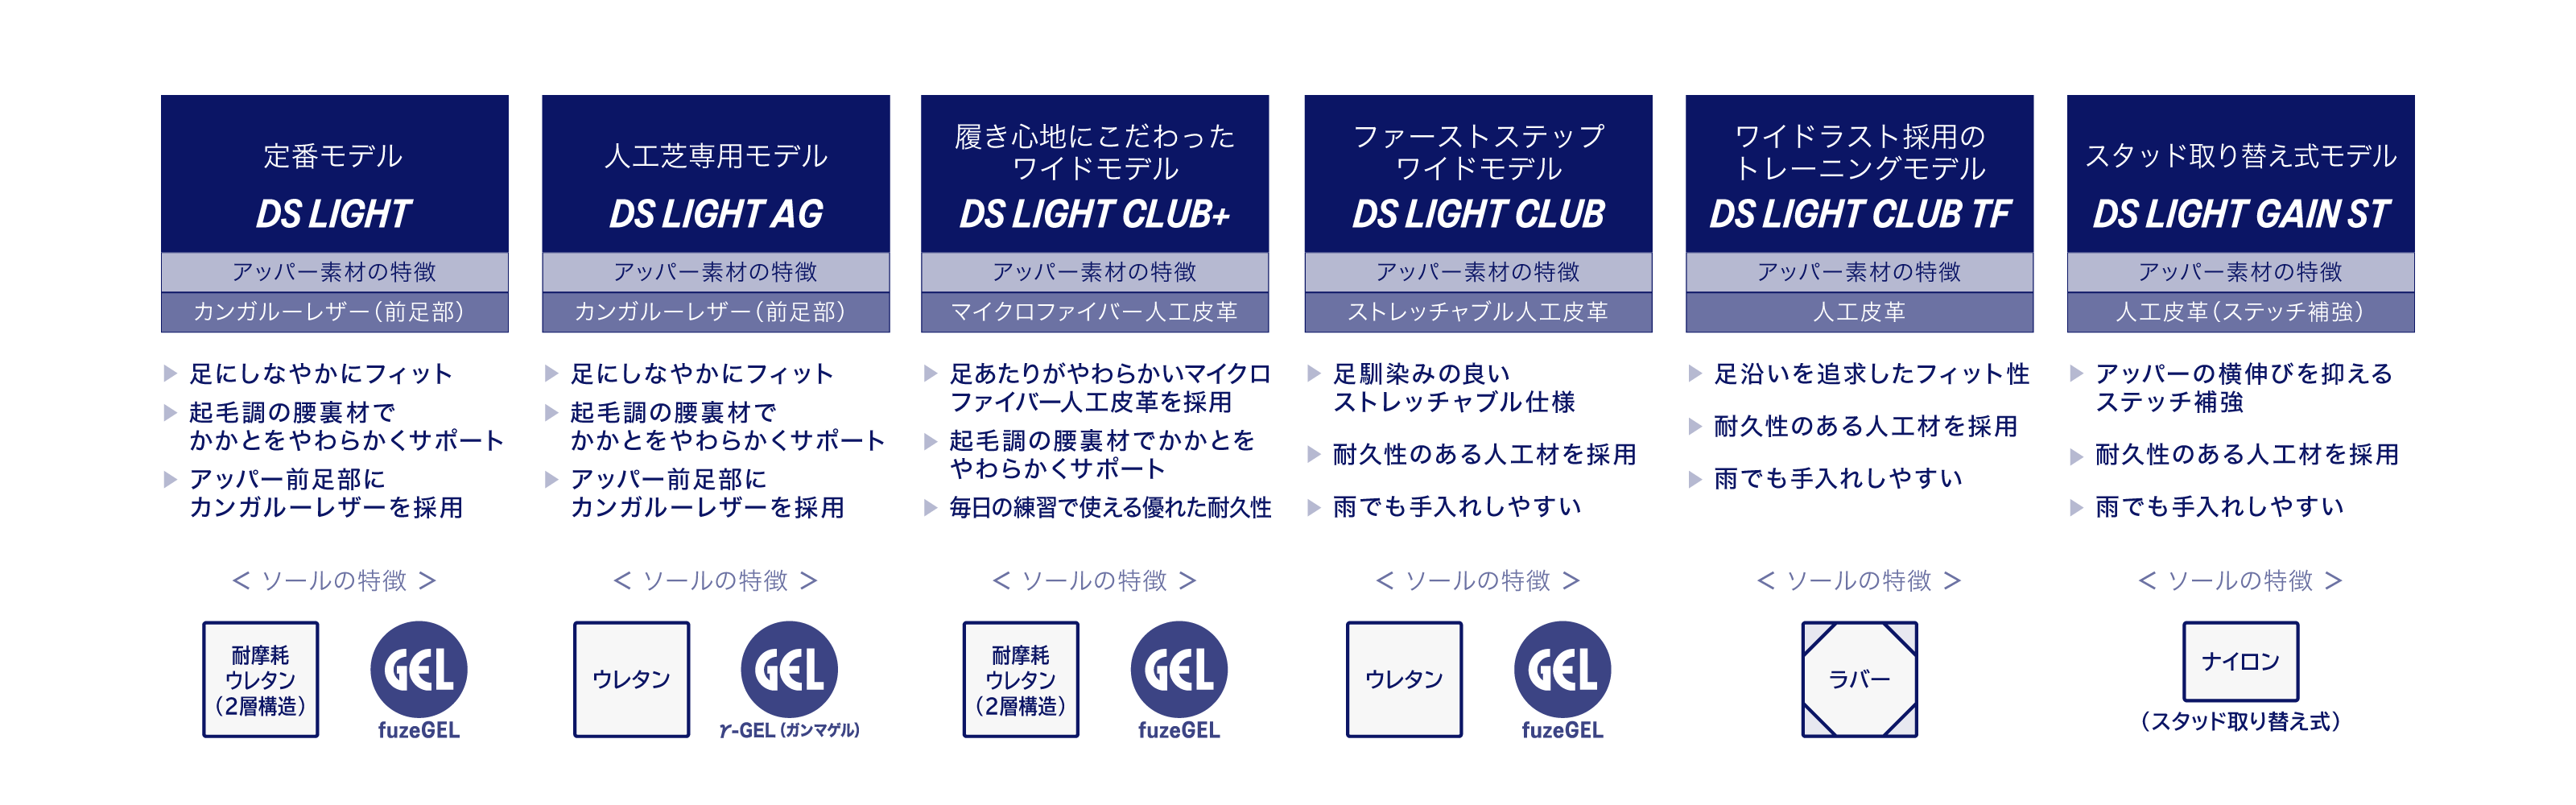 DSLIGHT_CHART